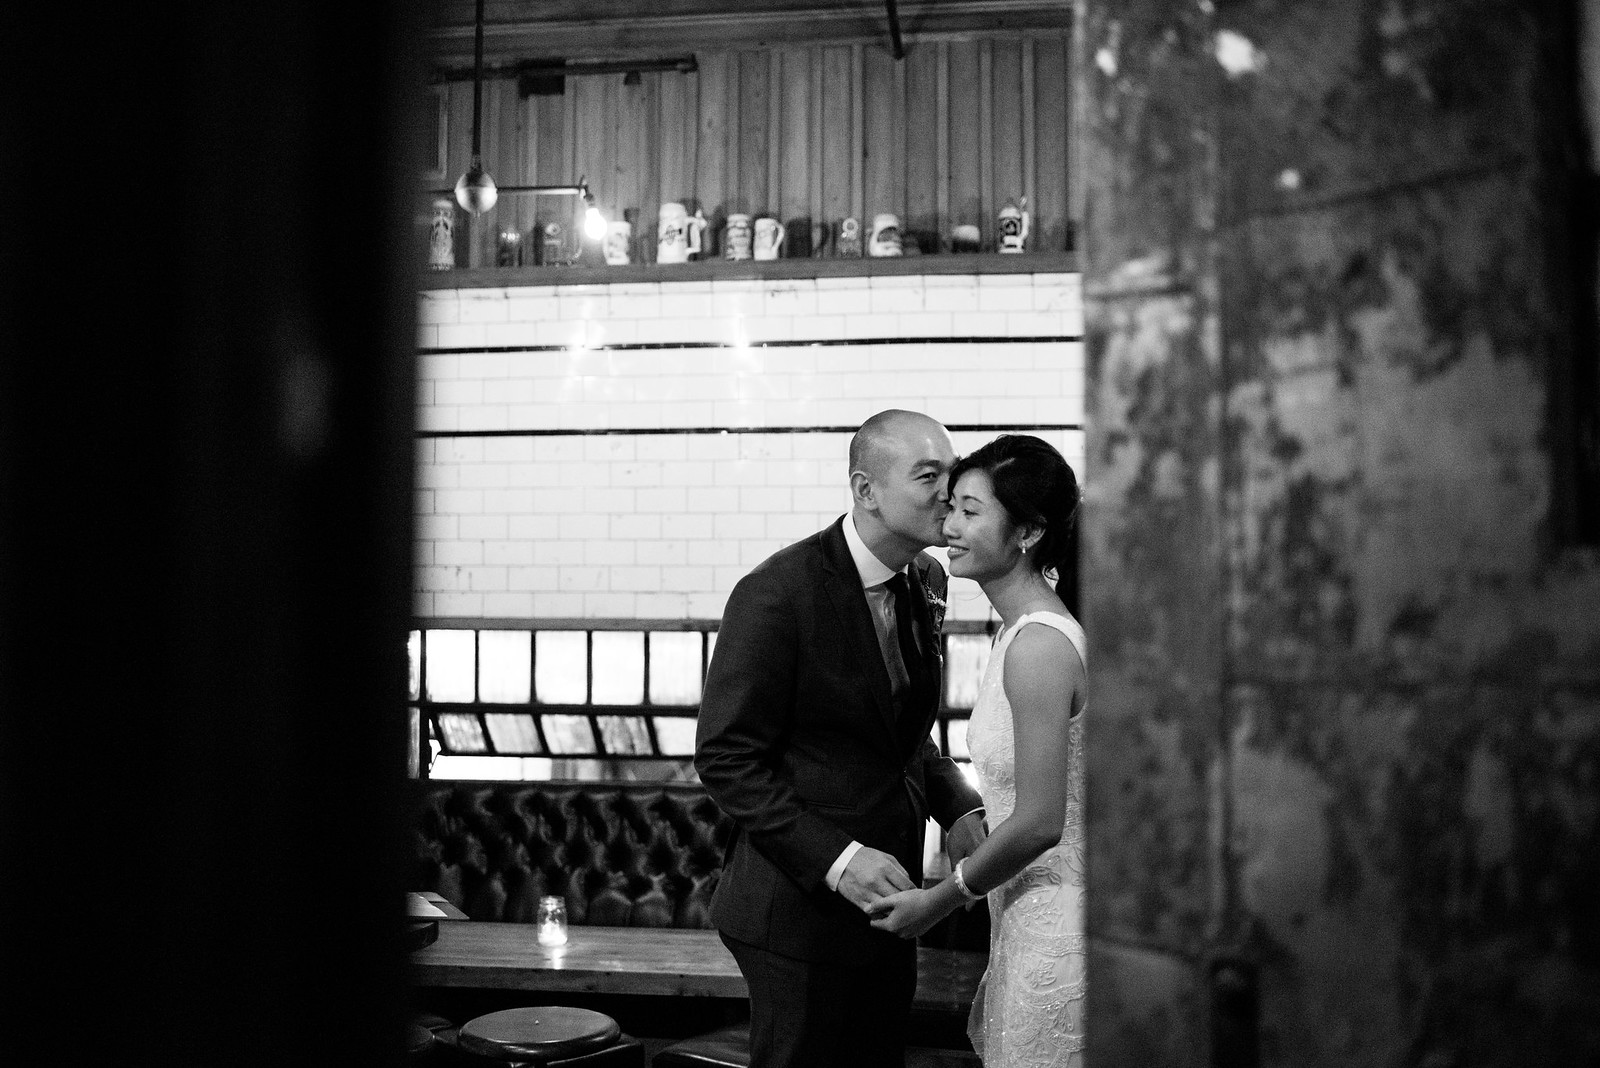 Houston Hall Wedding on juliettelauraphotography.blogspot.com